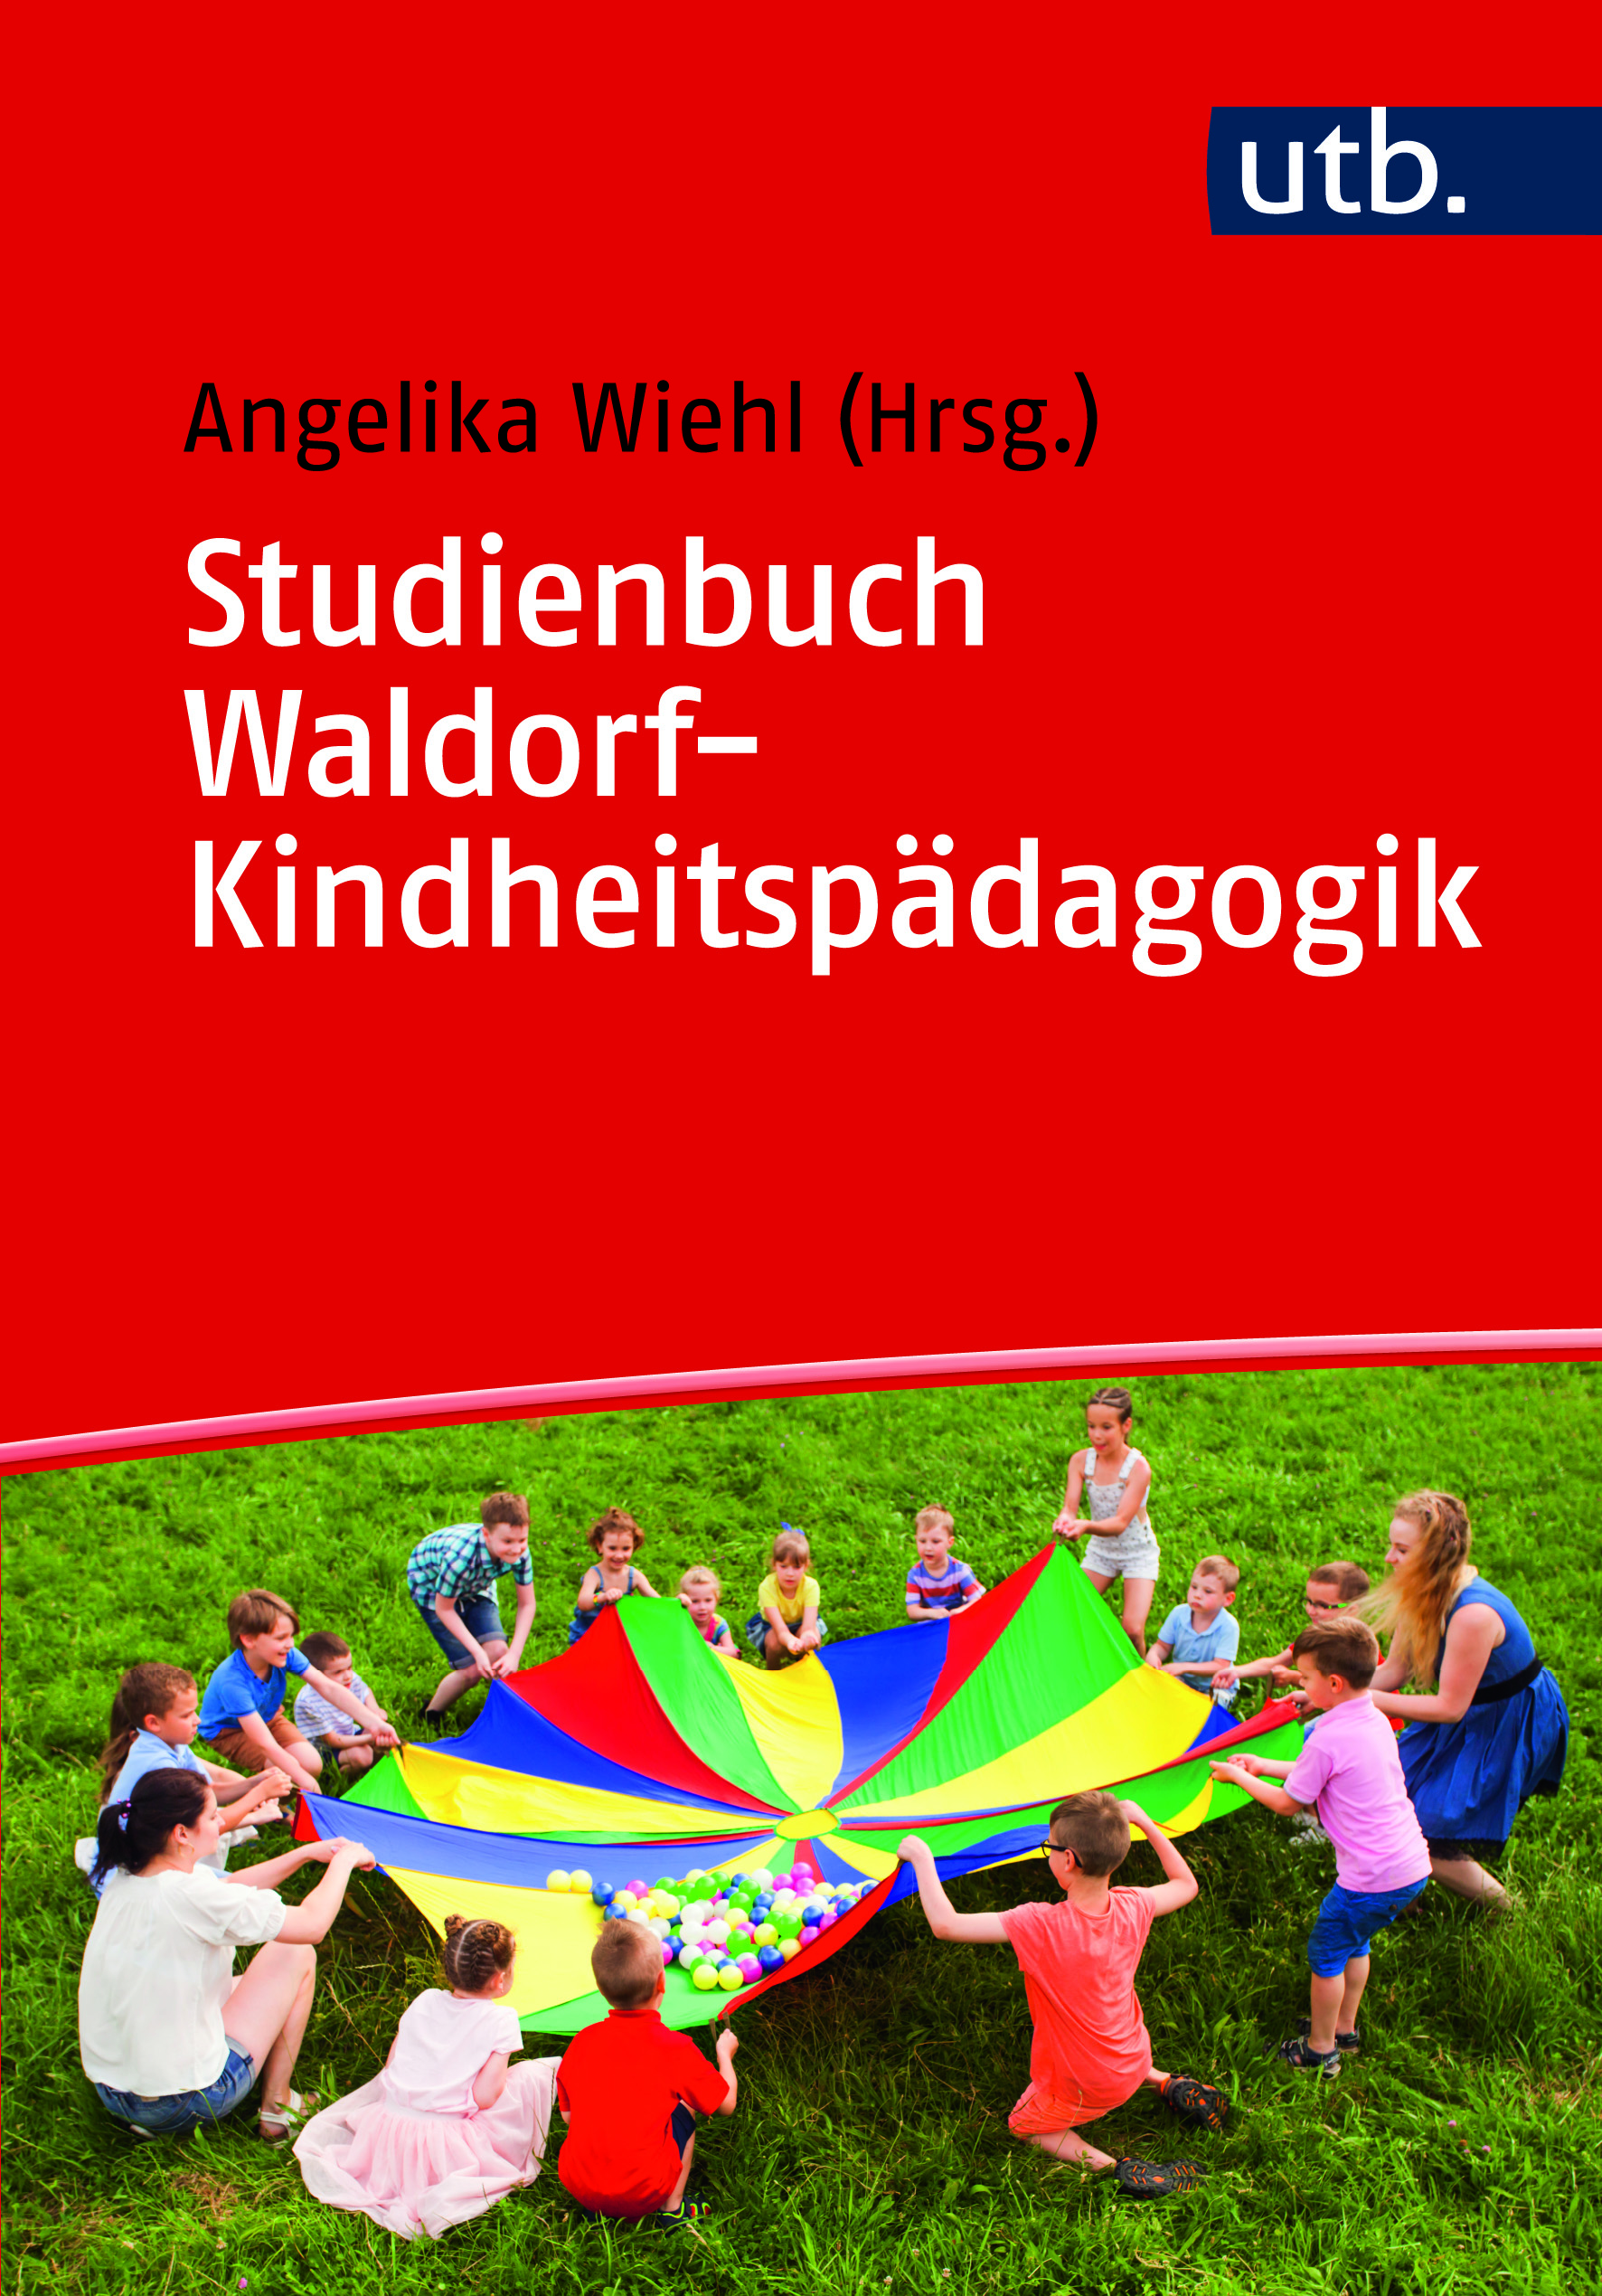 Wiehl, Angelika  (Hg.): Studienbuch Waldorf- Kindheitspädagogik